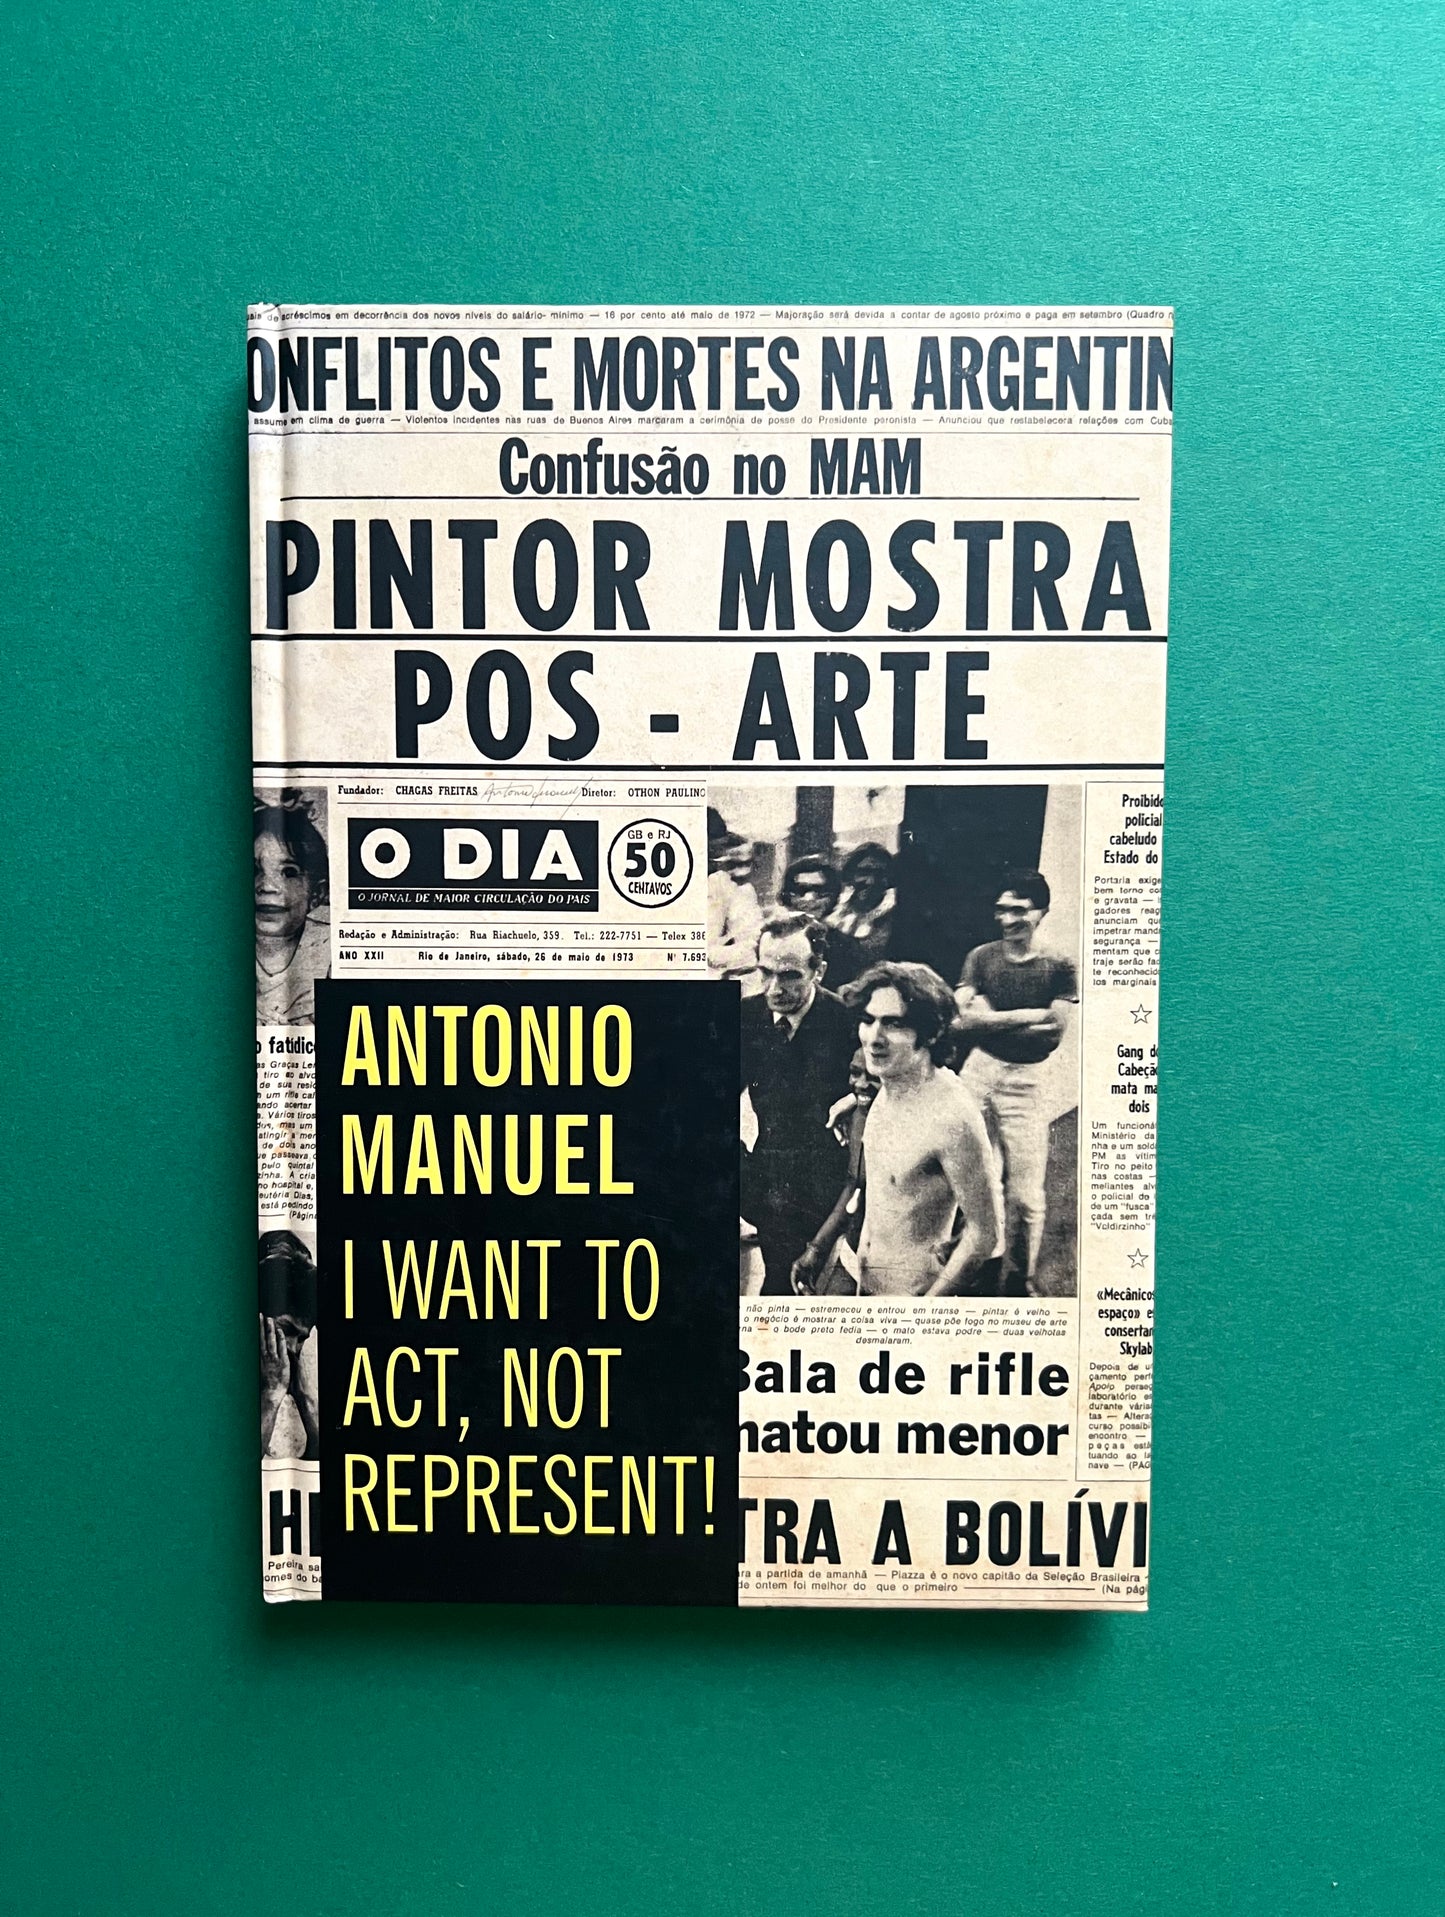 Antonio Manuel: I Want to Act, Not Represent!